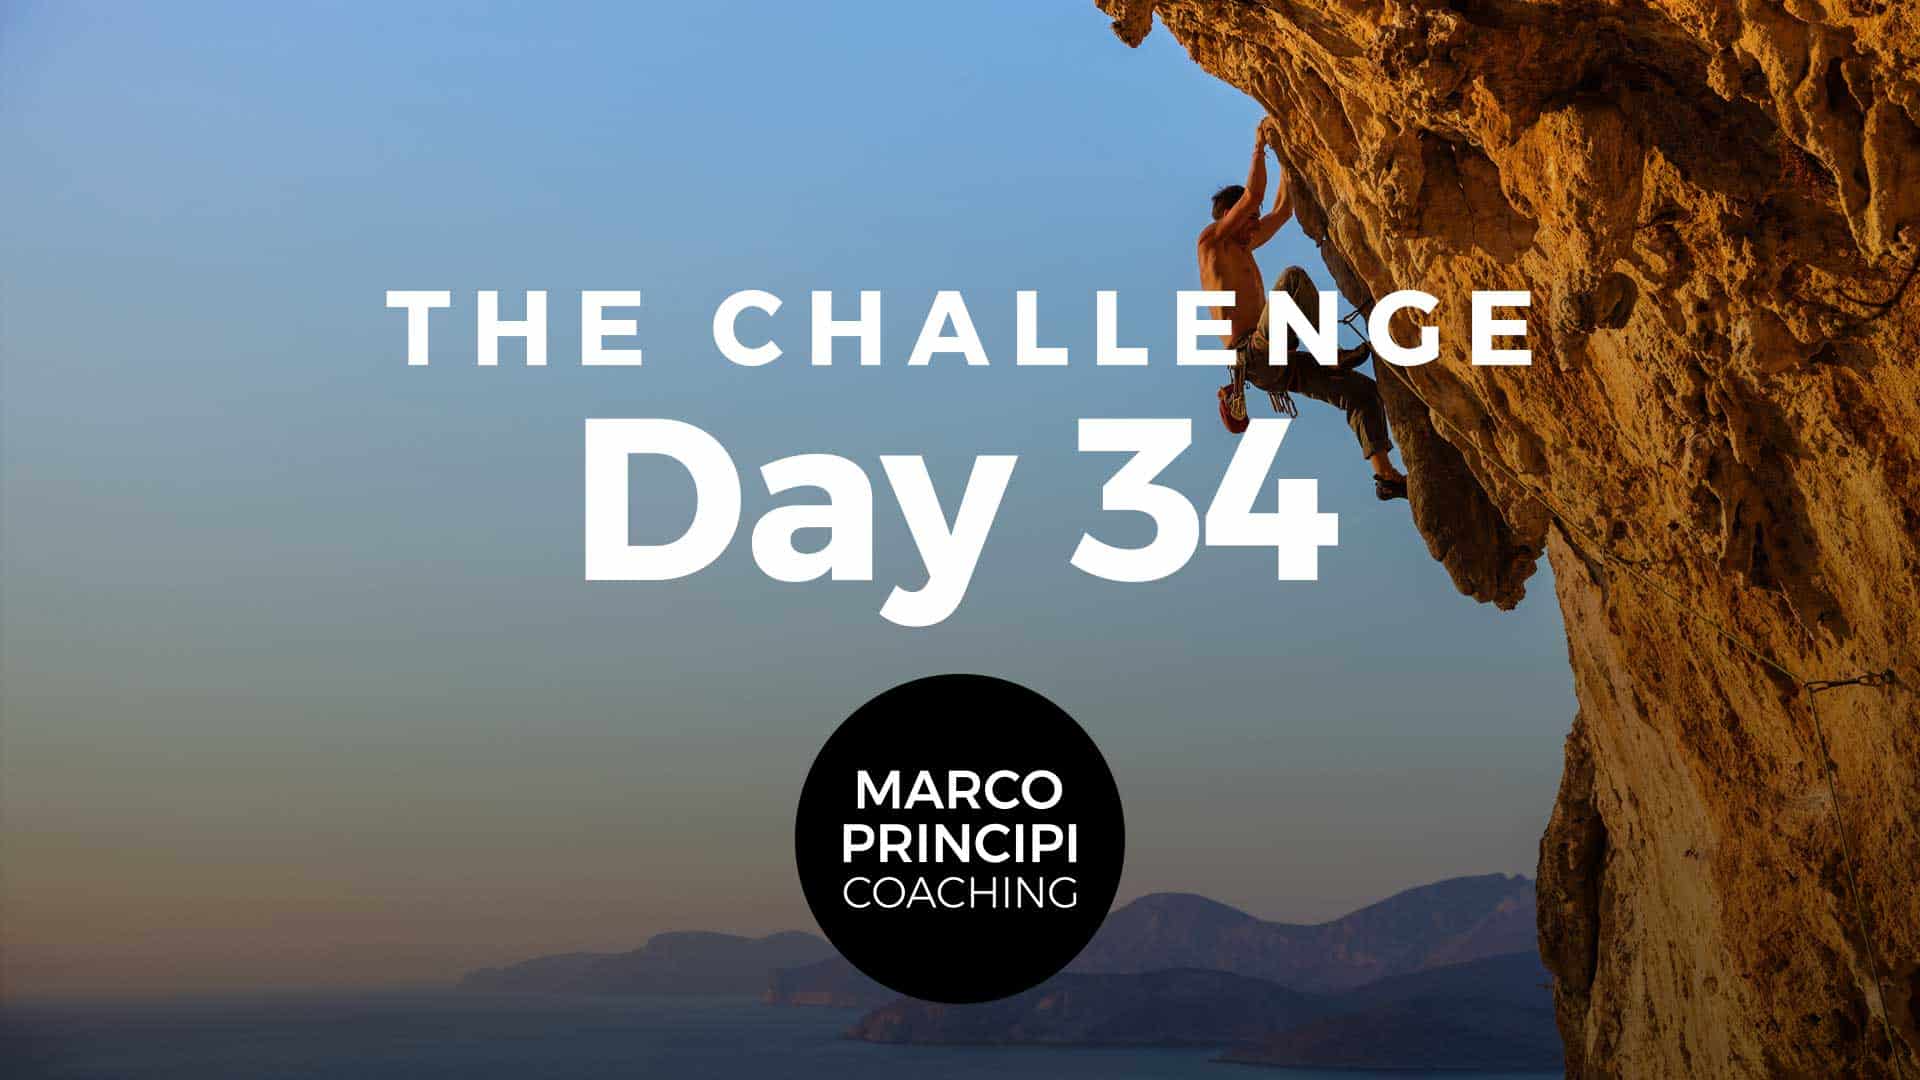 Marco Principi The Challenge Day 34